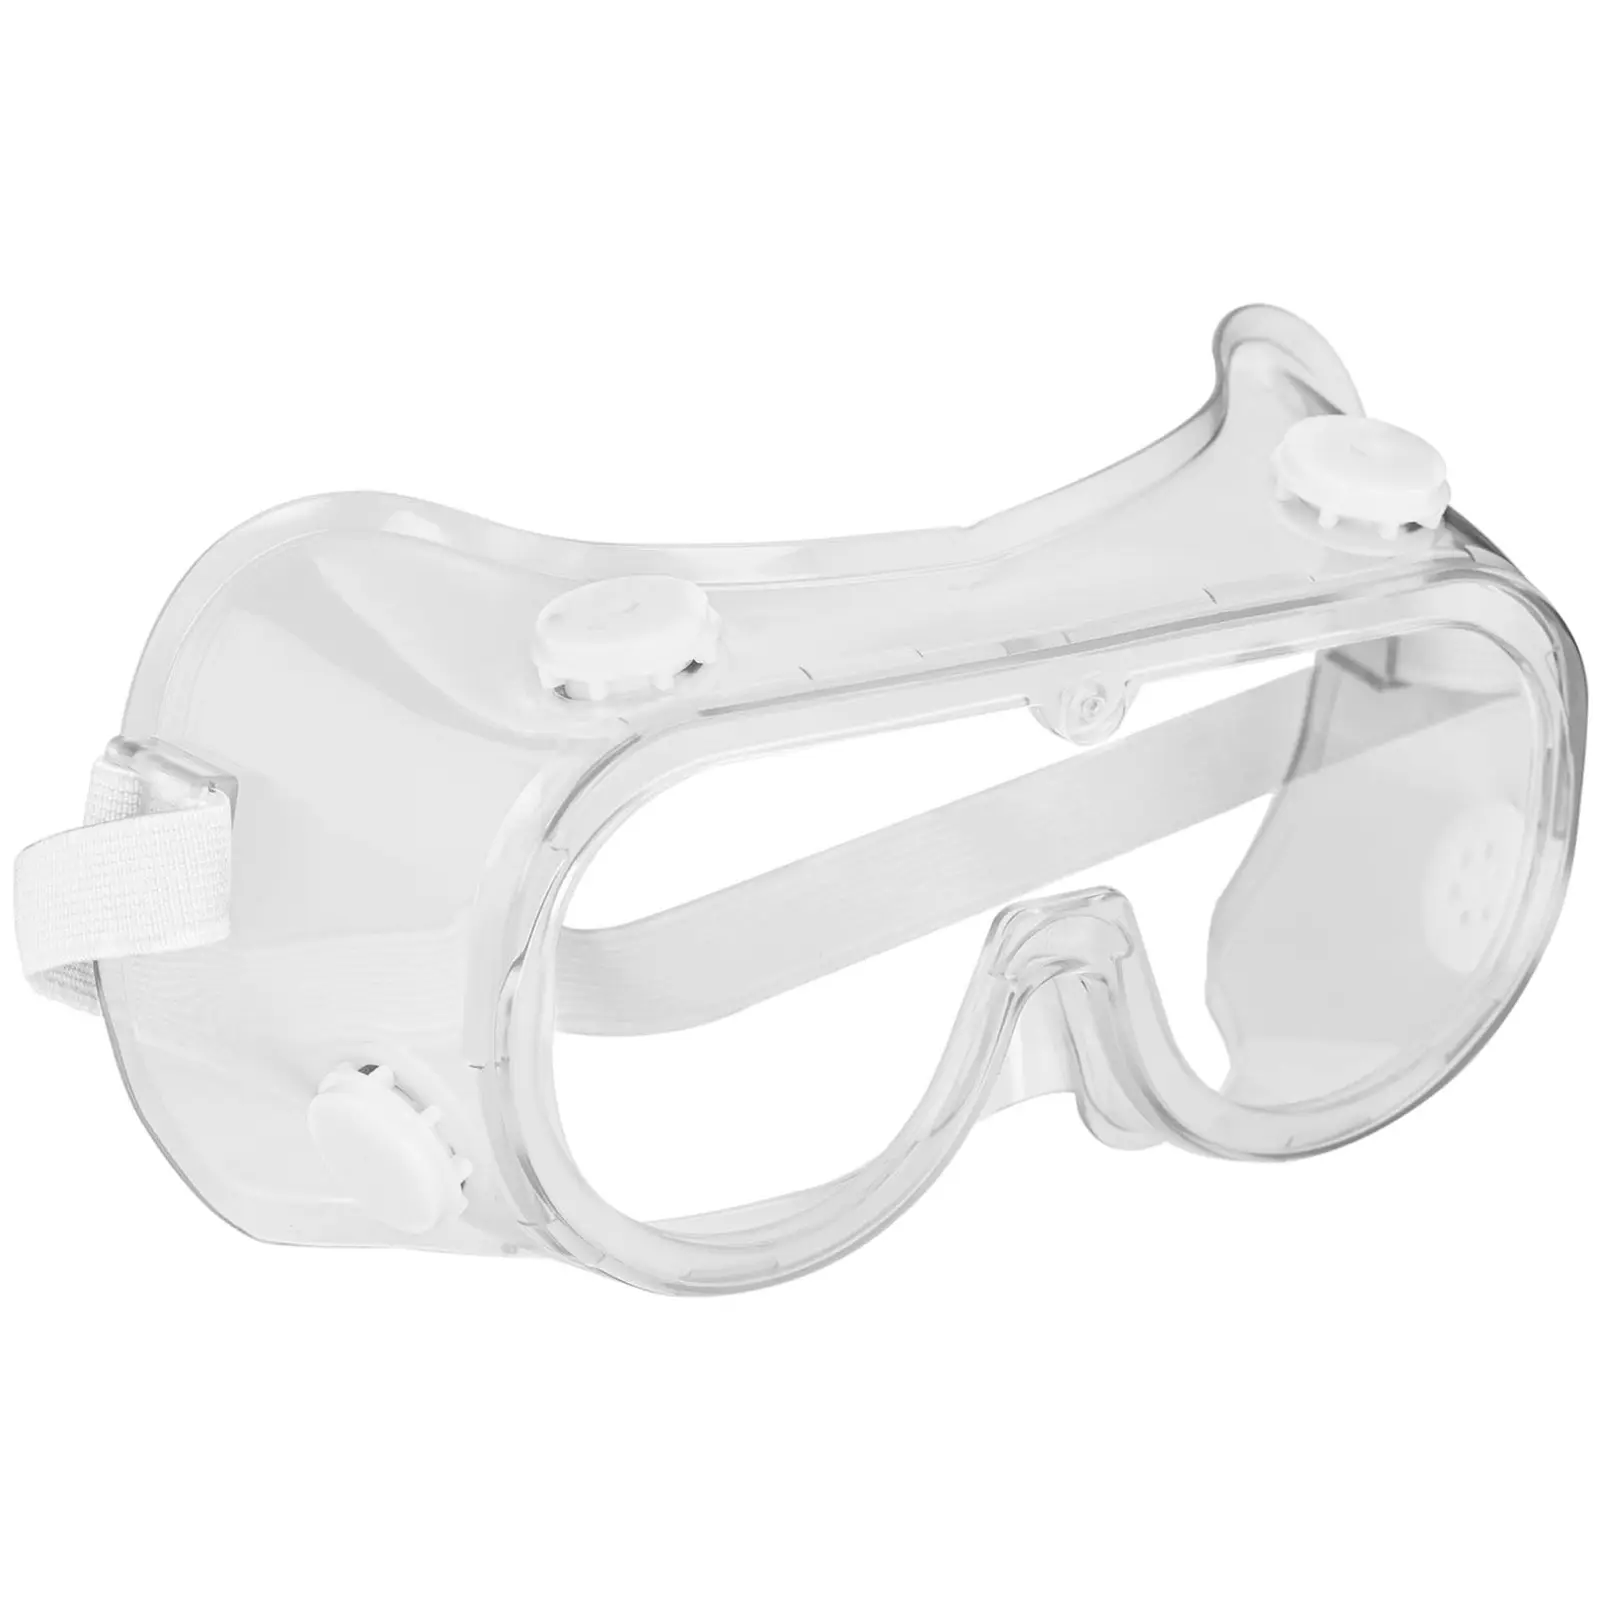 Skyddsglasögon - 3-pack - transparenta - enhetsstorlek